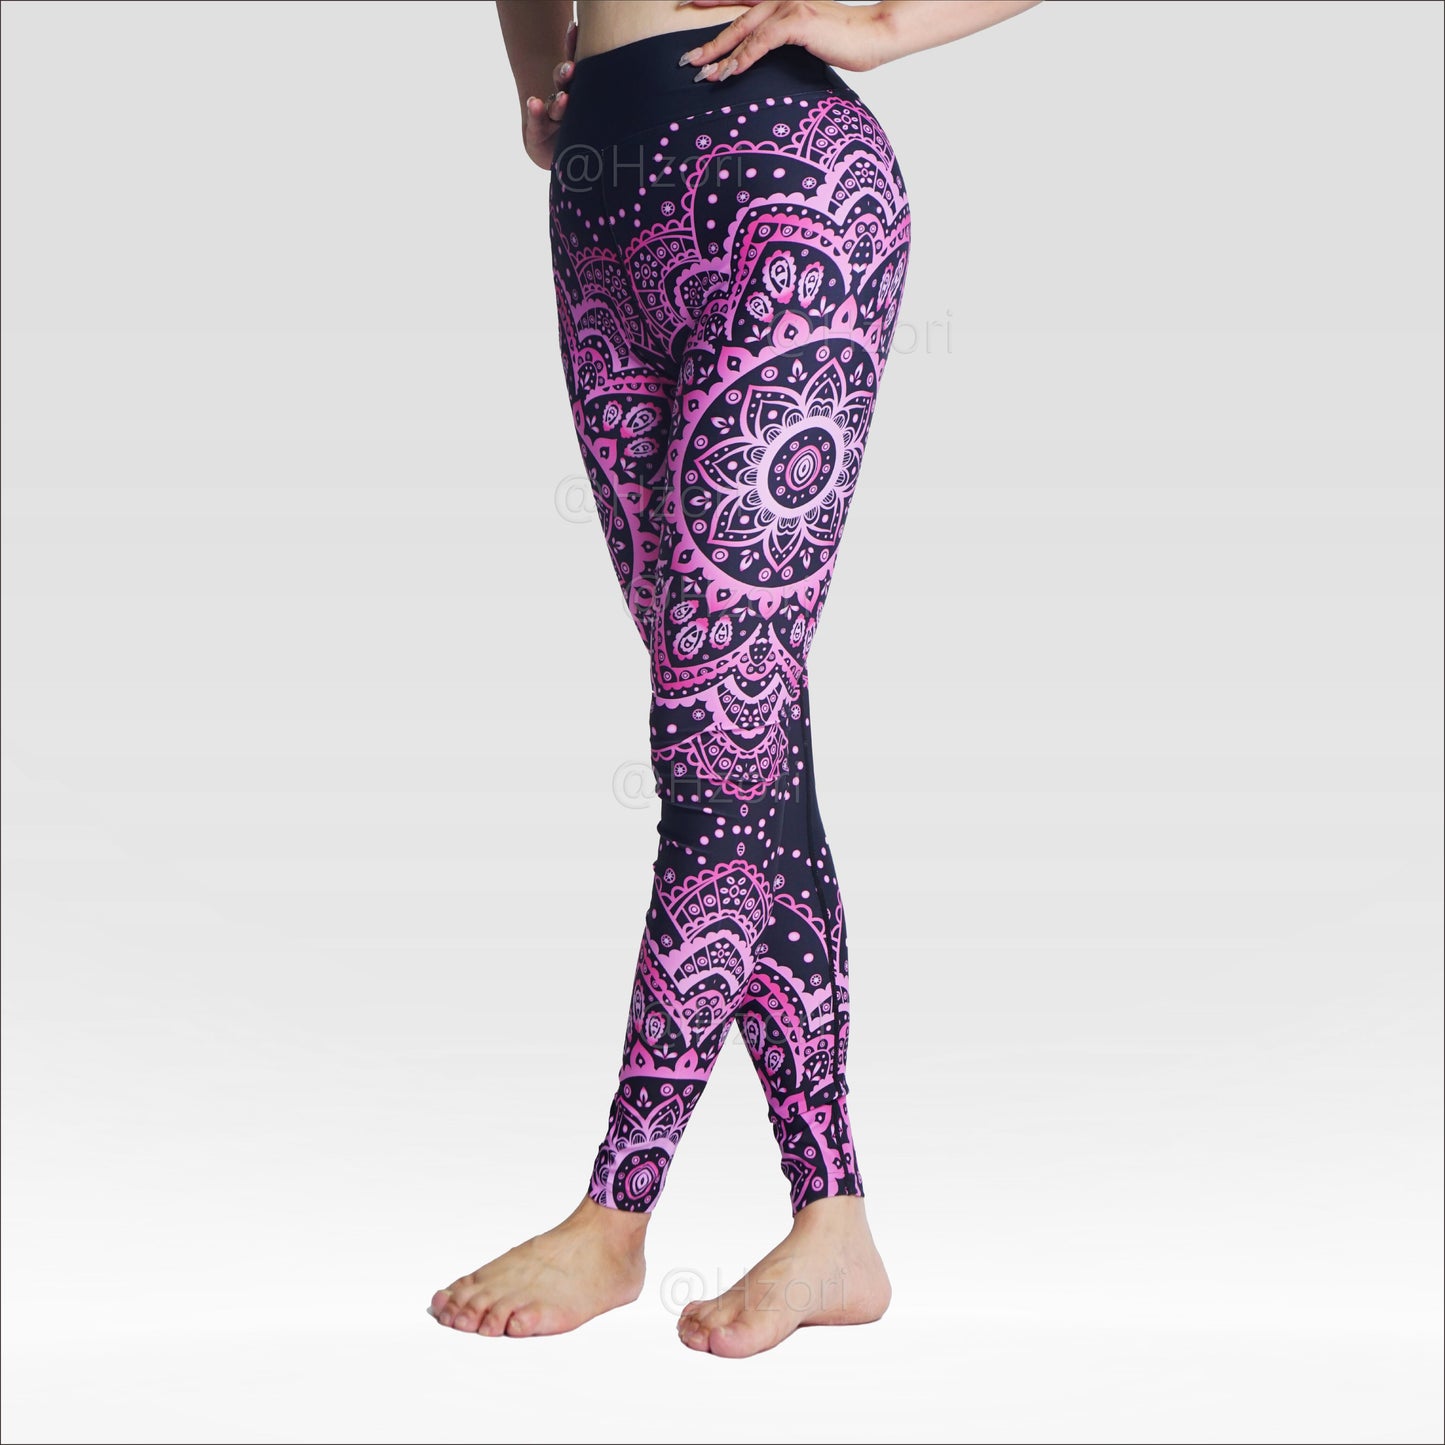 HZORI® |High Waist Printed Yoga Pants for Women, Tummy Control Running Sports Workout Yoga Leggings|Sunflower Purple Style